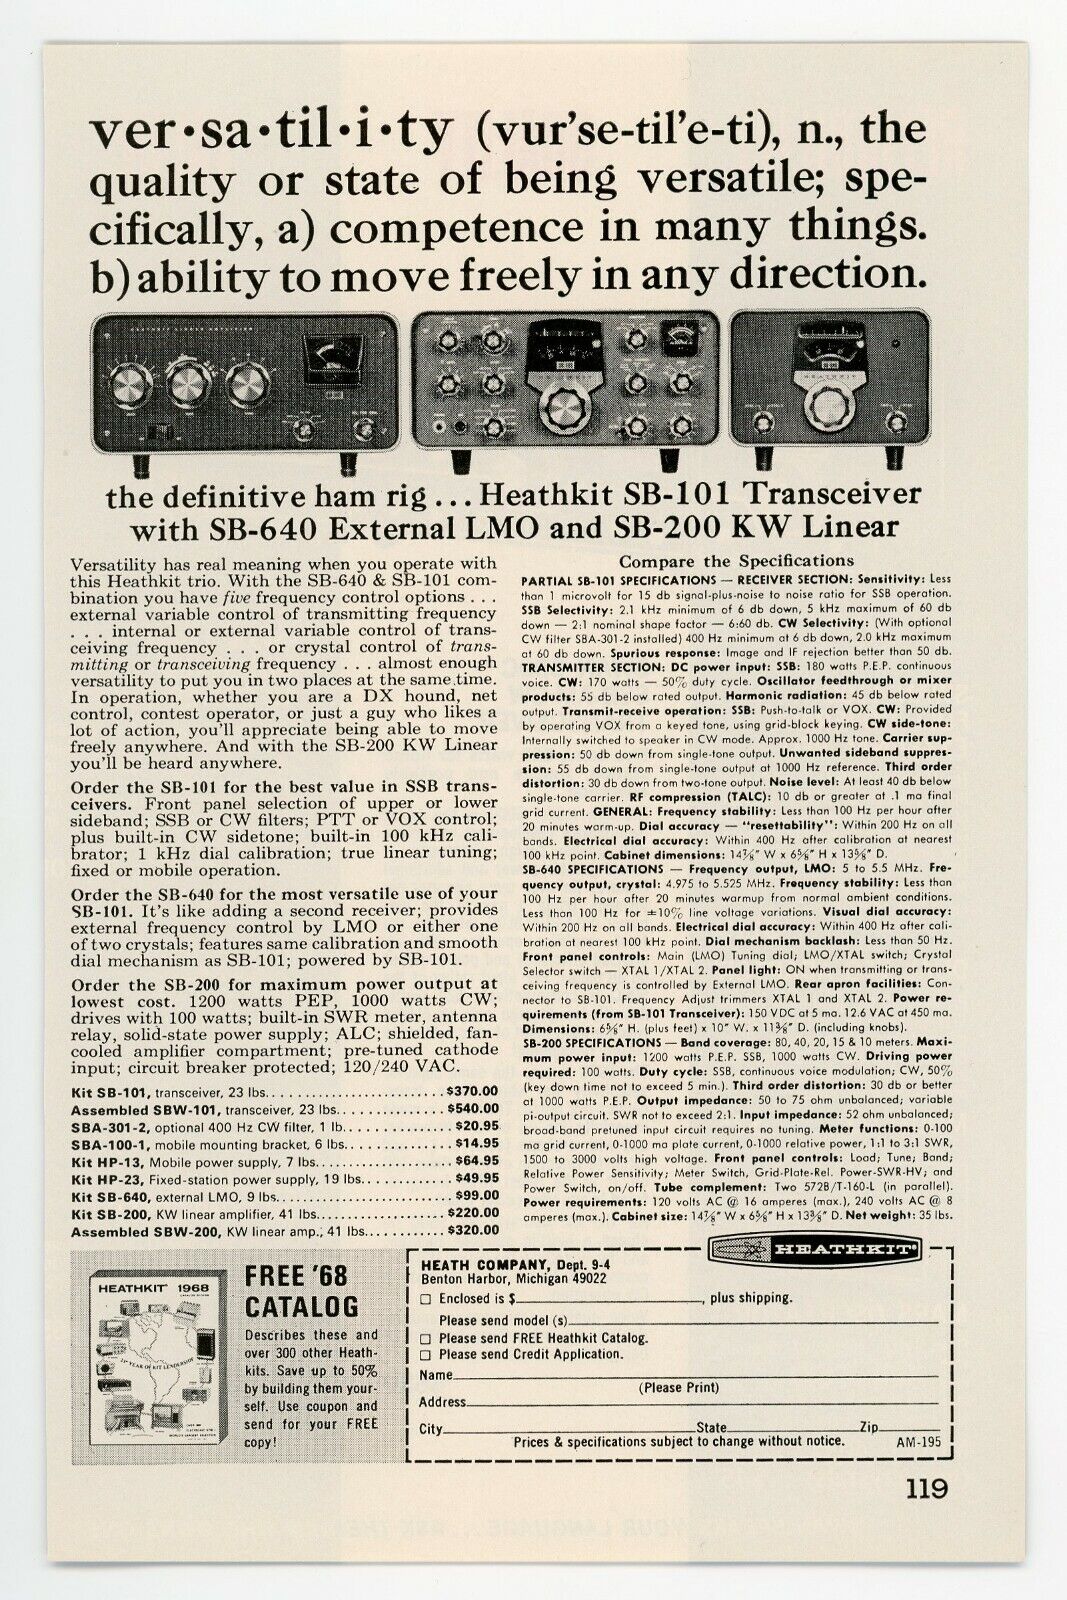 QST Ham Radio Magazine Ad Heathkit SB-101 Transceiver, SB-640 External LMO(4/68)